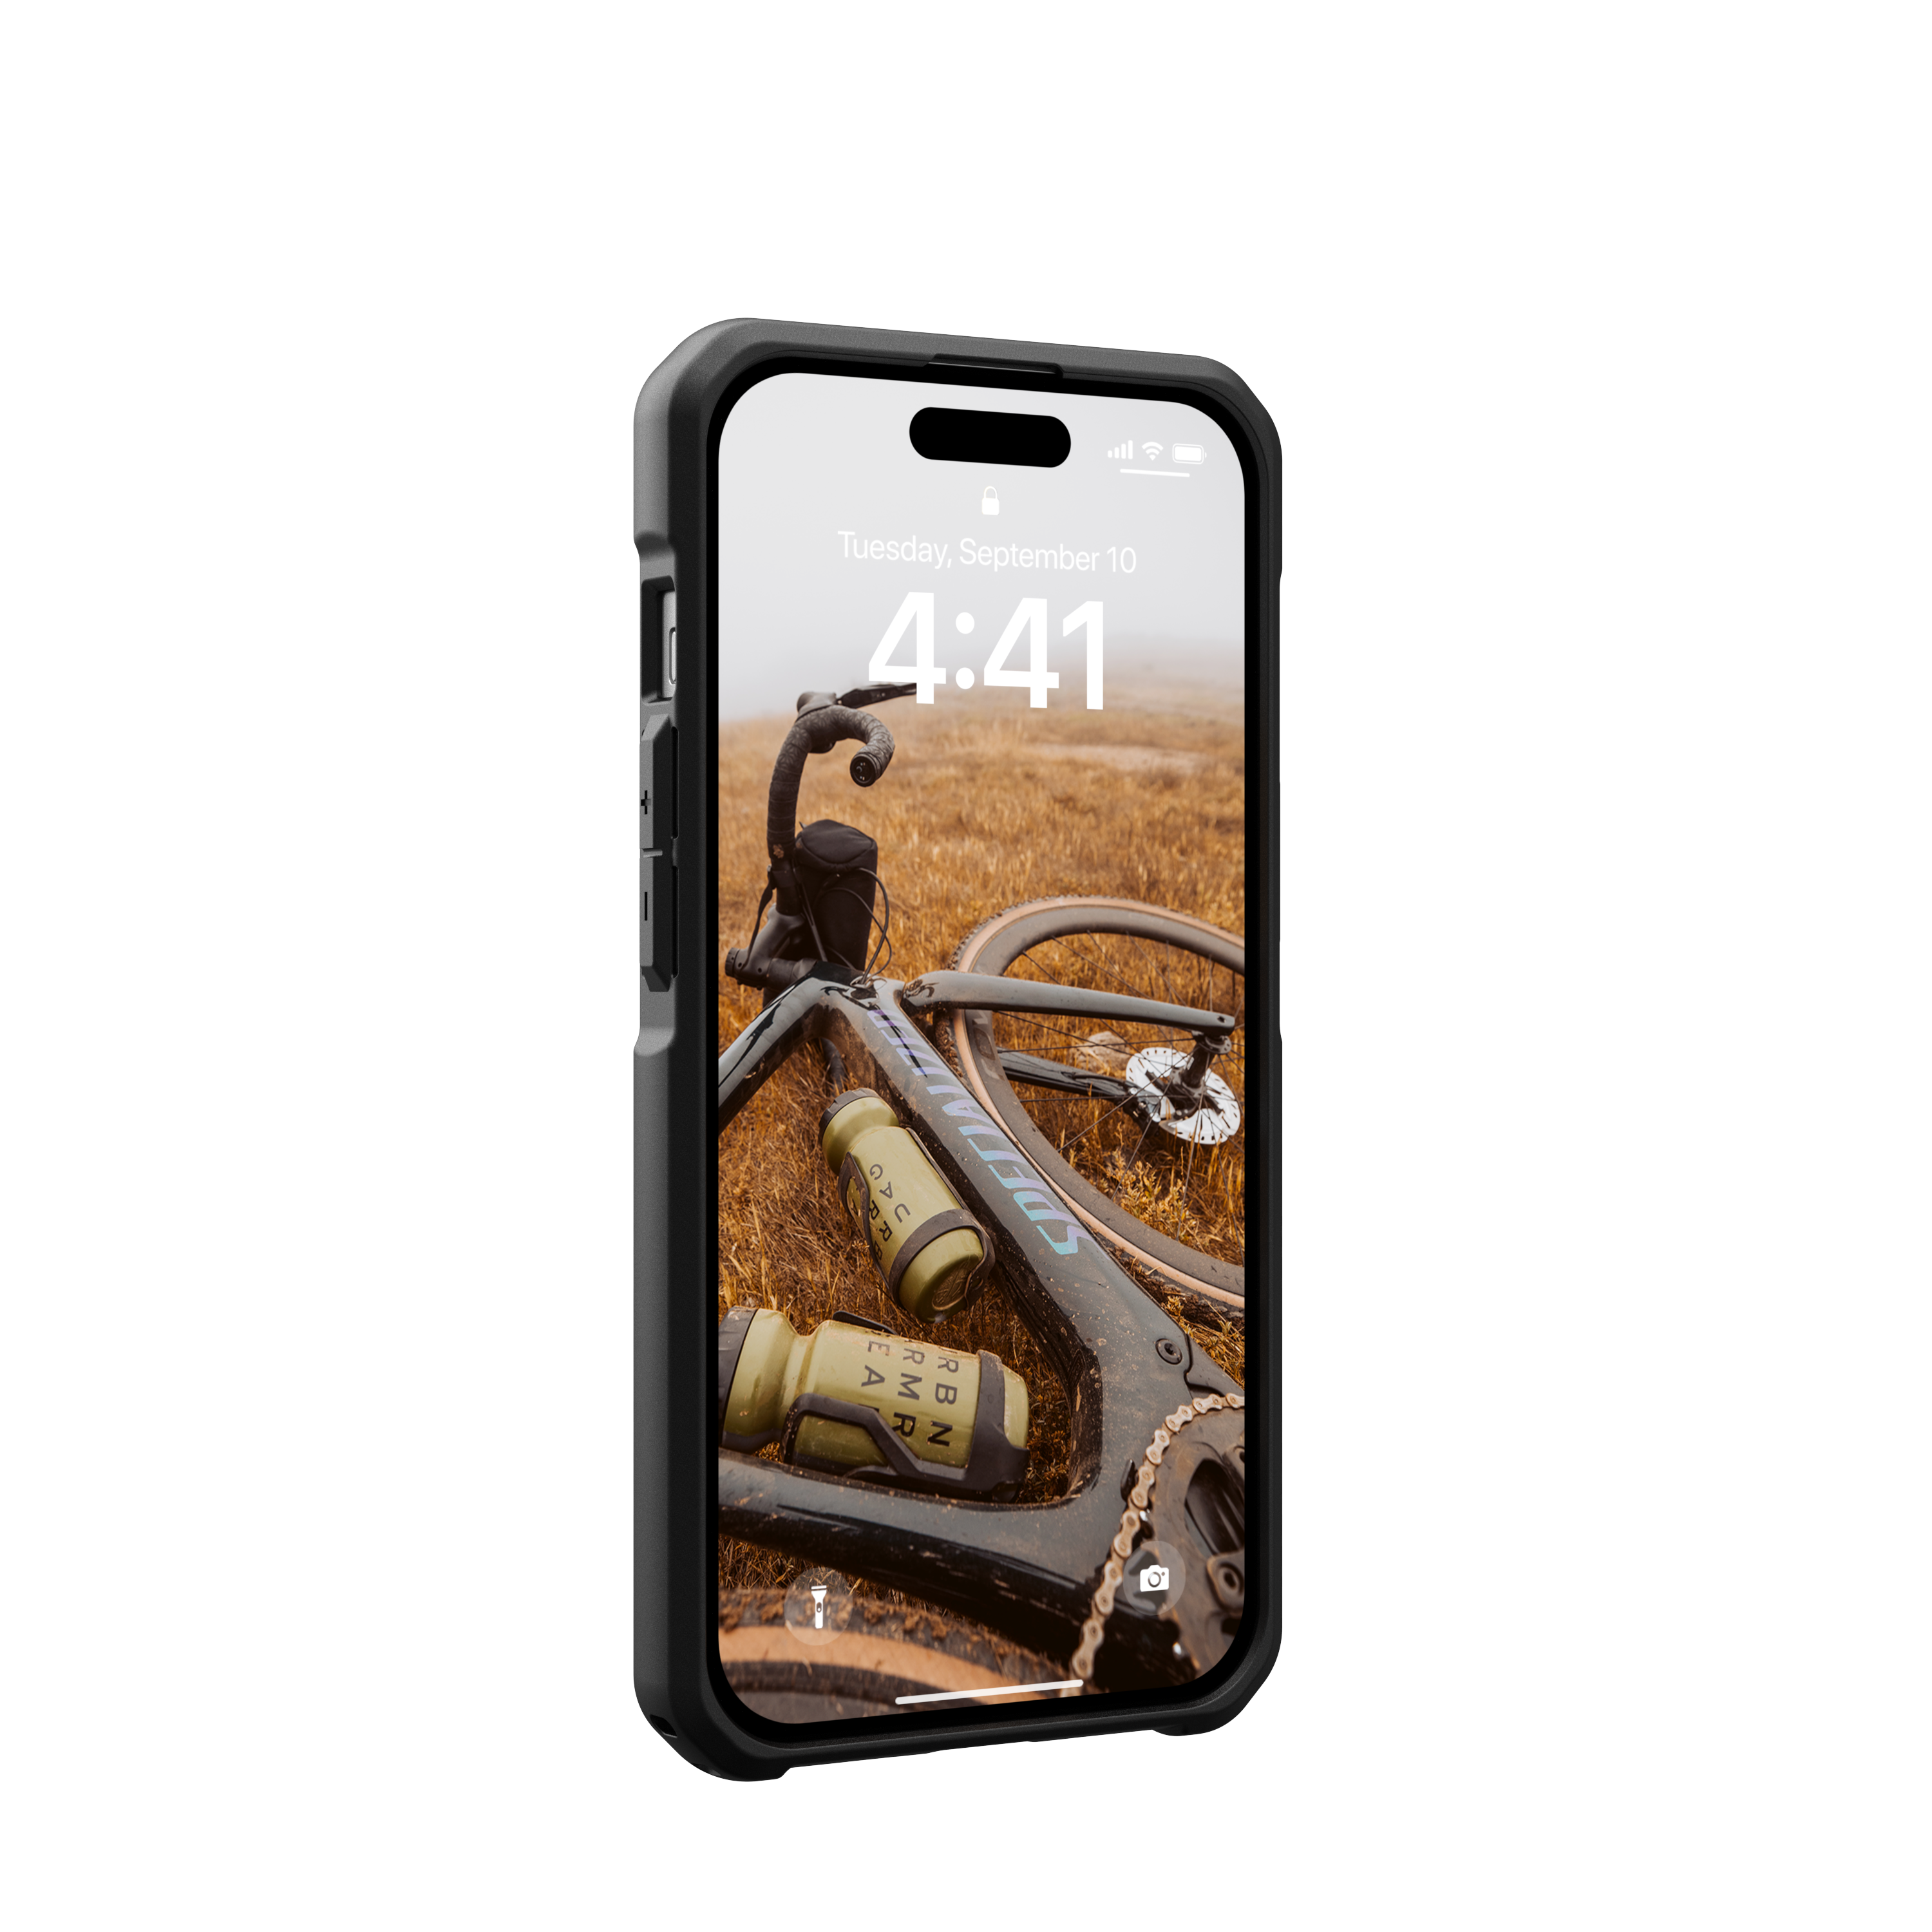 GEAR Metropolis Apple, LT ARMOR 15, schwarz kevlar URBAN iPhone MagSafe, Backcover,